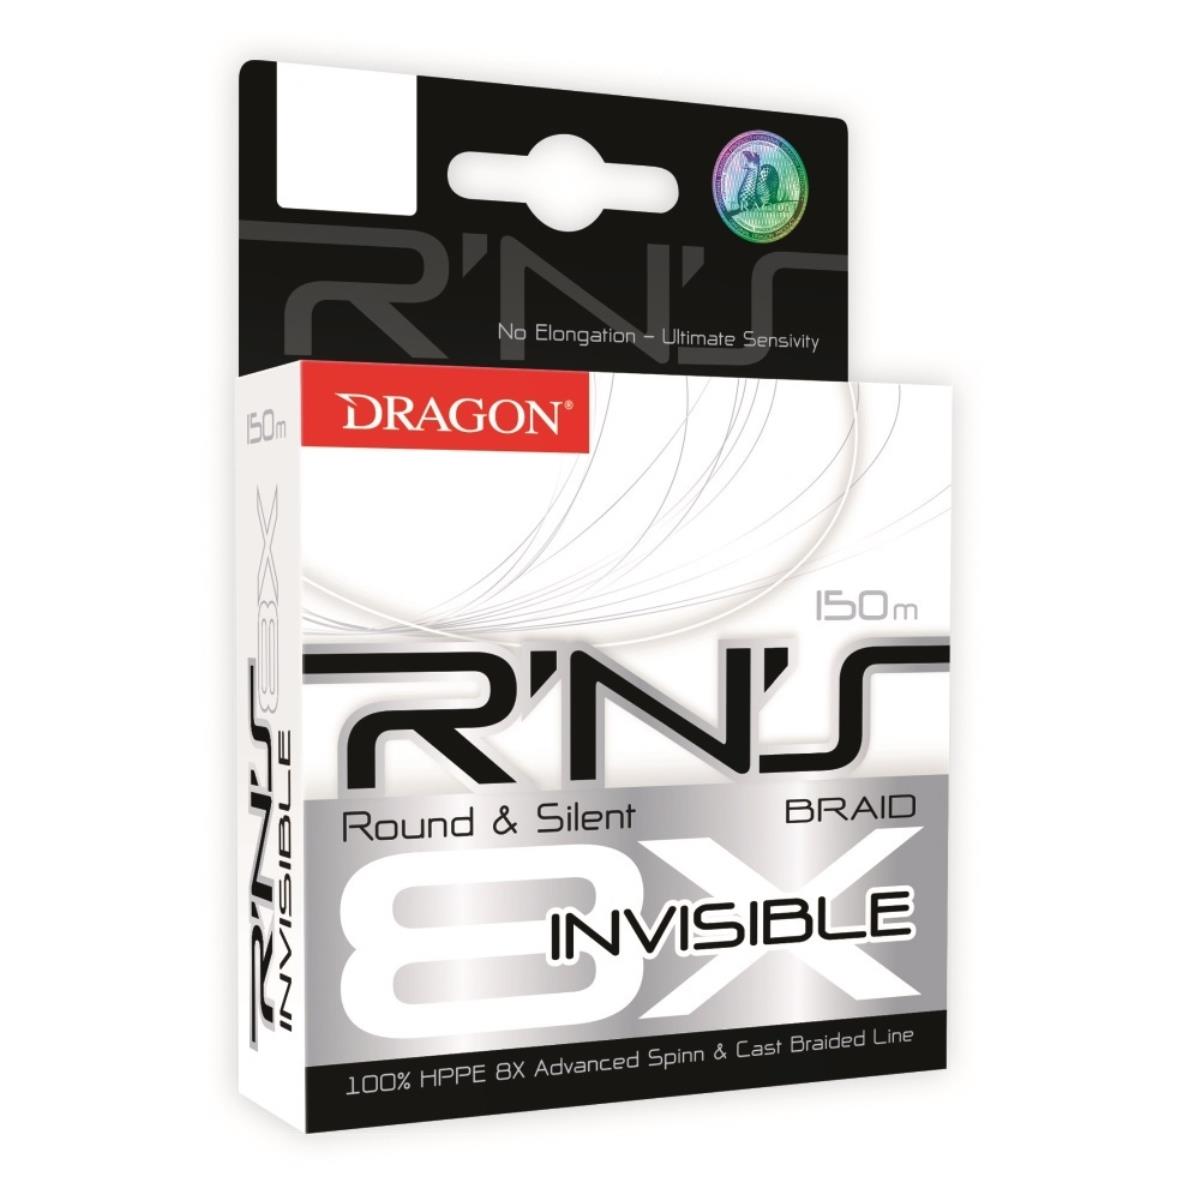 Шнур R'N'S 8X Invisible 150 м Dragon шнур с выключателем oxion 1 8 м прозрачный